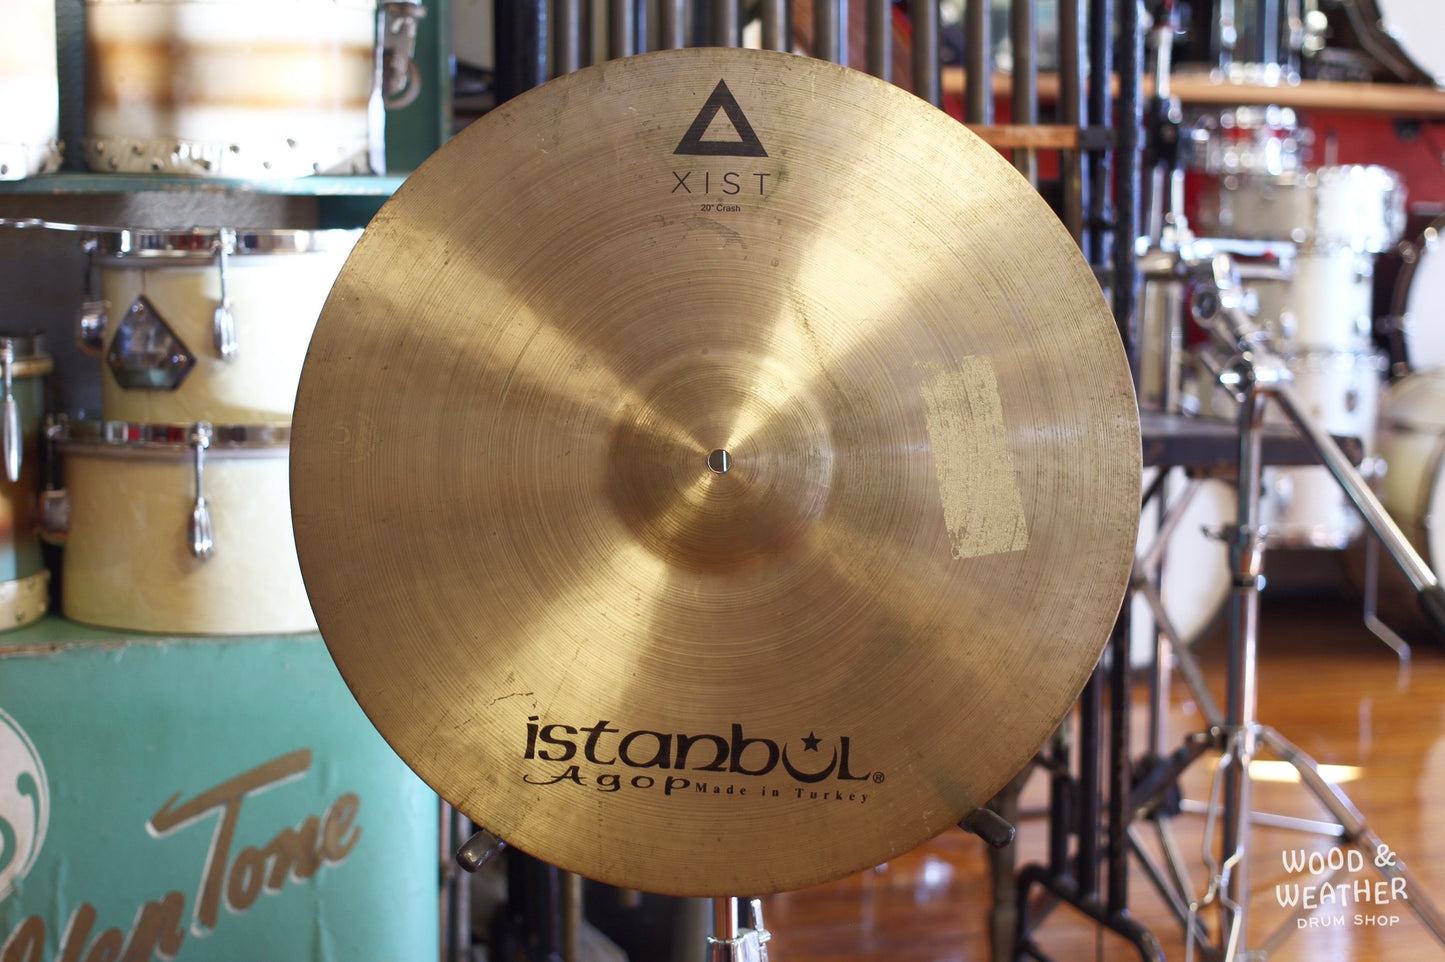 Used Istanbul Agop 20" Xist Crash Cymbal 1657g